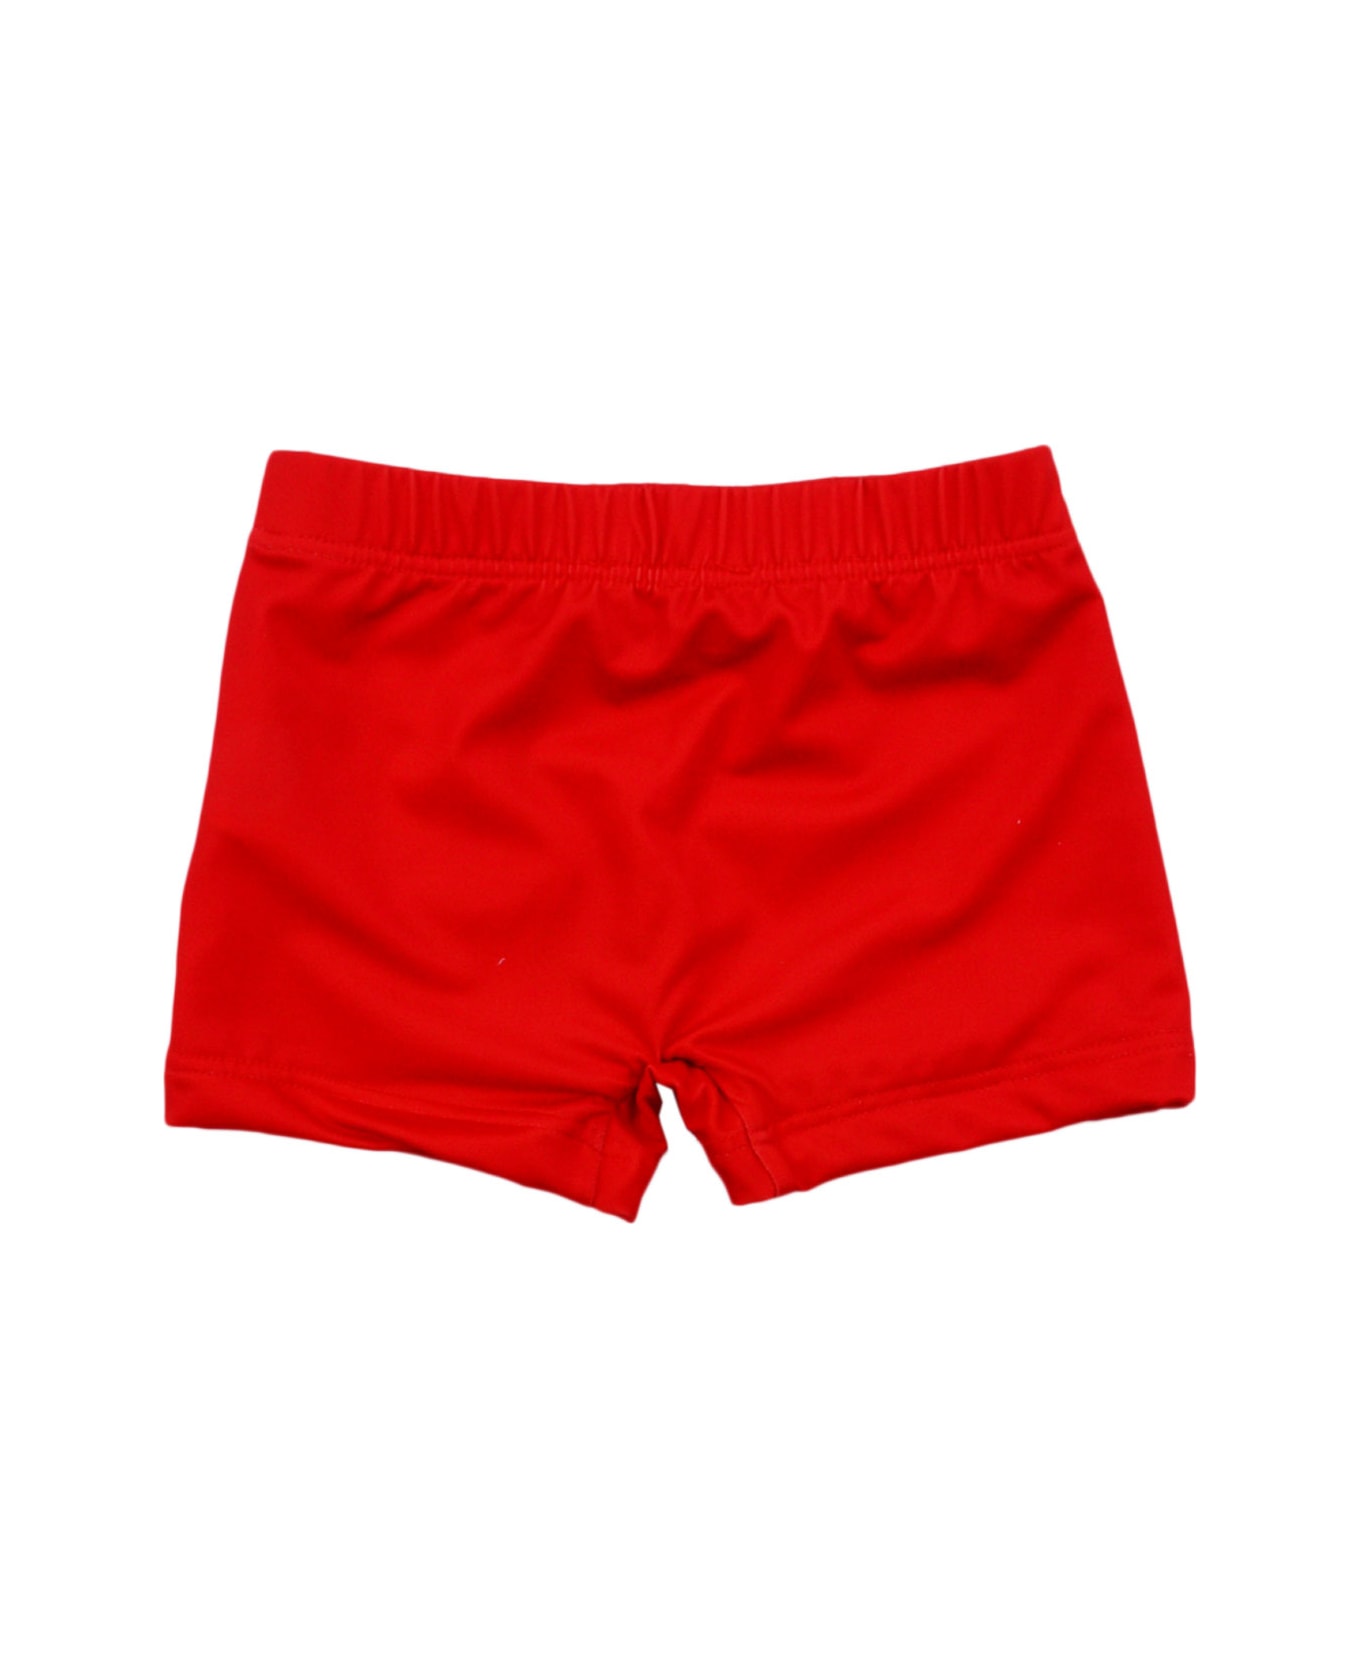 Moschino Printed Beach Shorts - Red